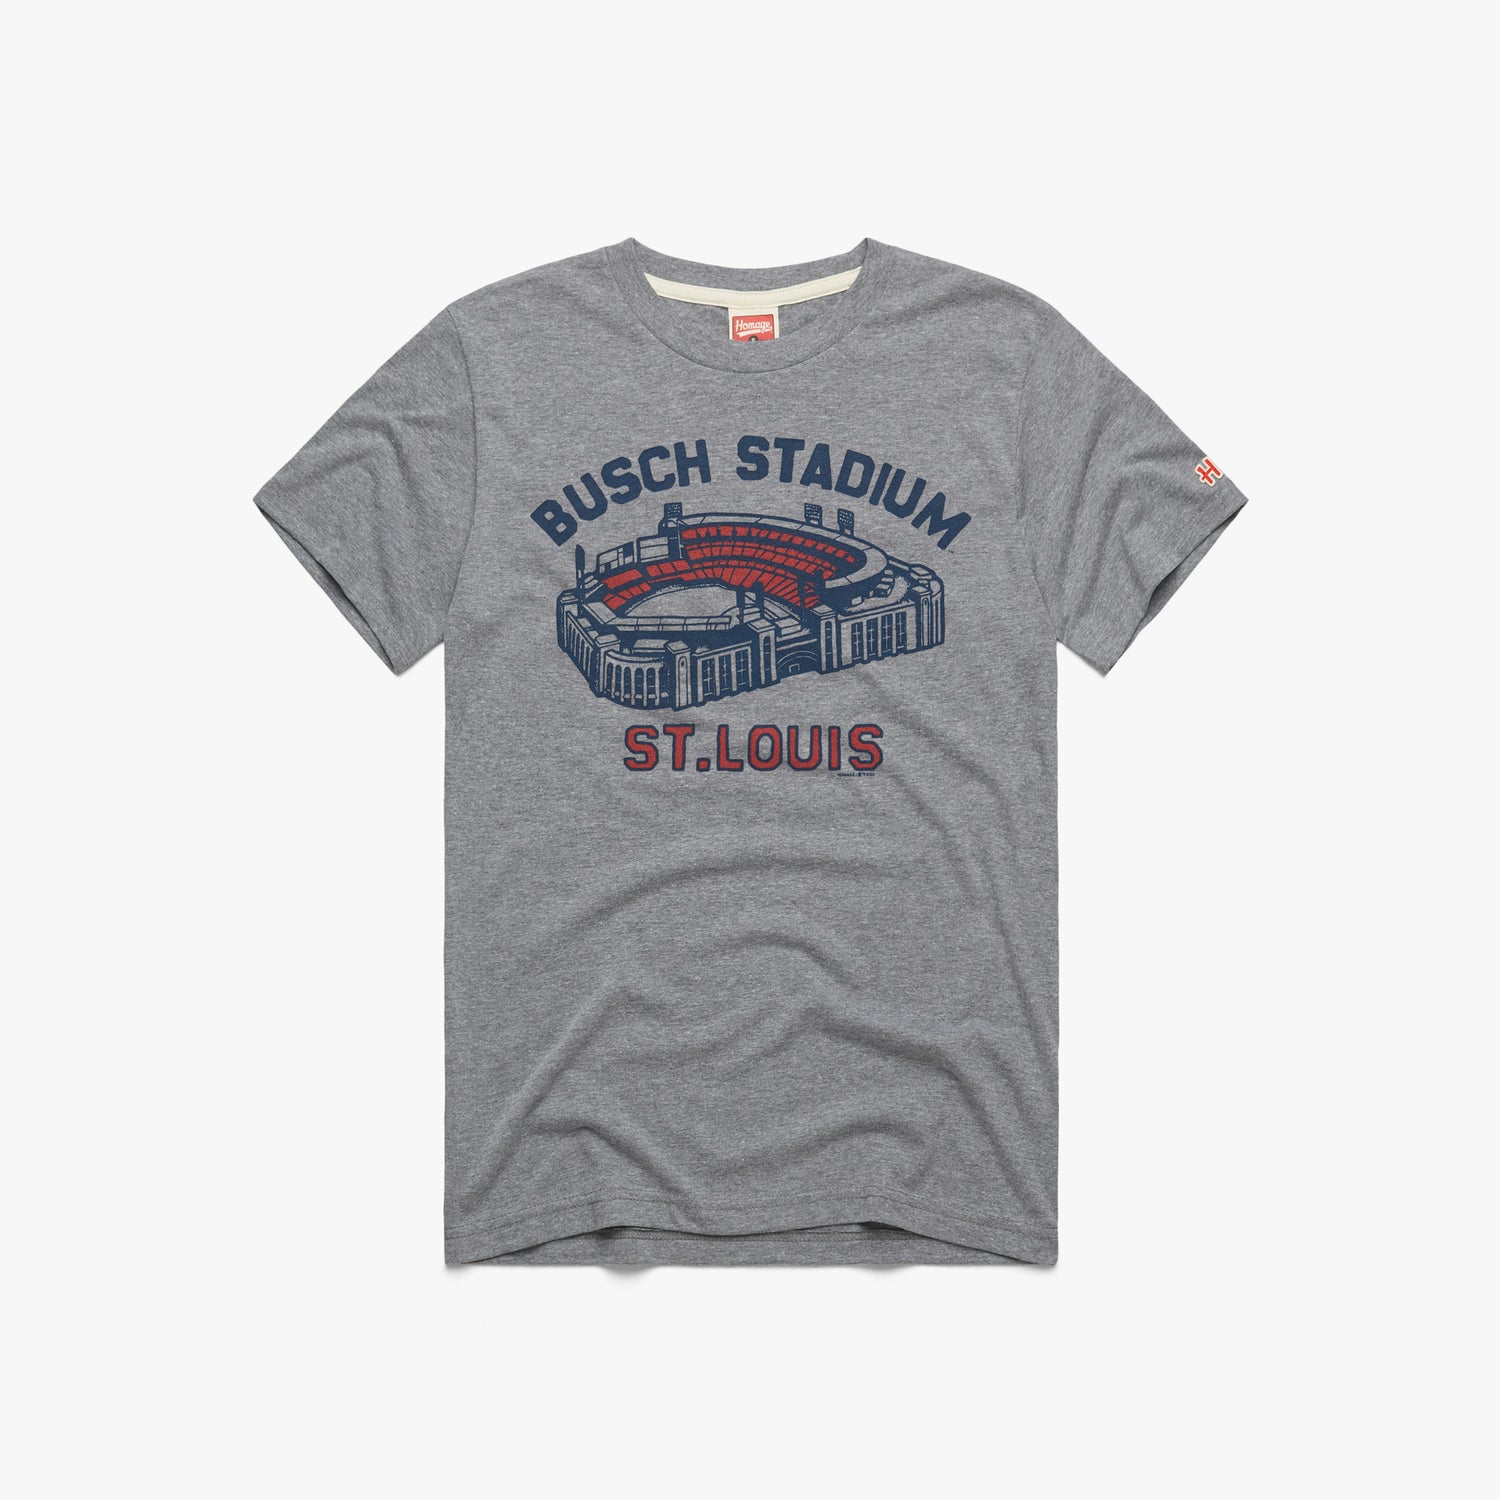 St. Louis Cardinals T-shirt Men’s Size XL Polyester Tee Shirt Red STL MLB